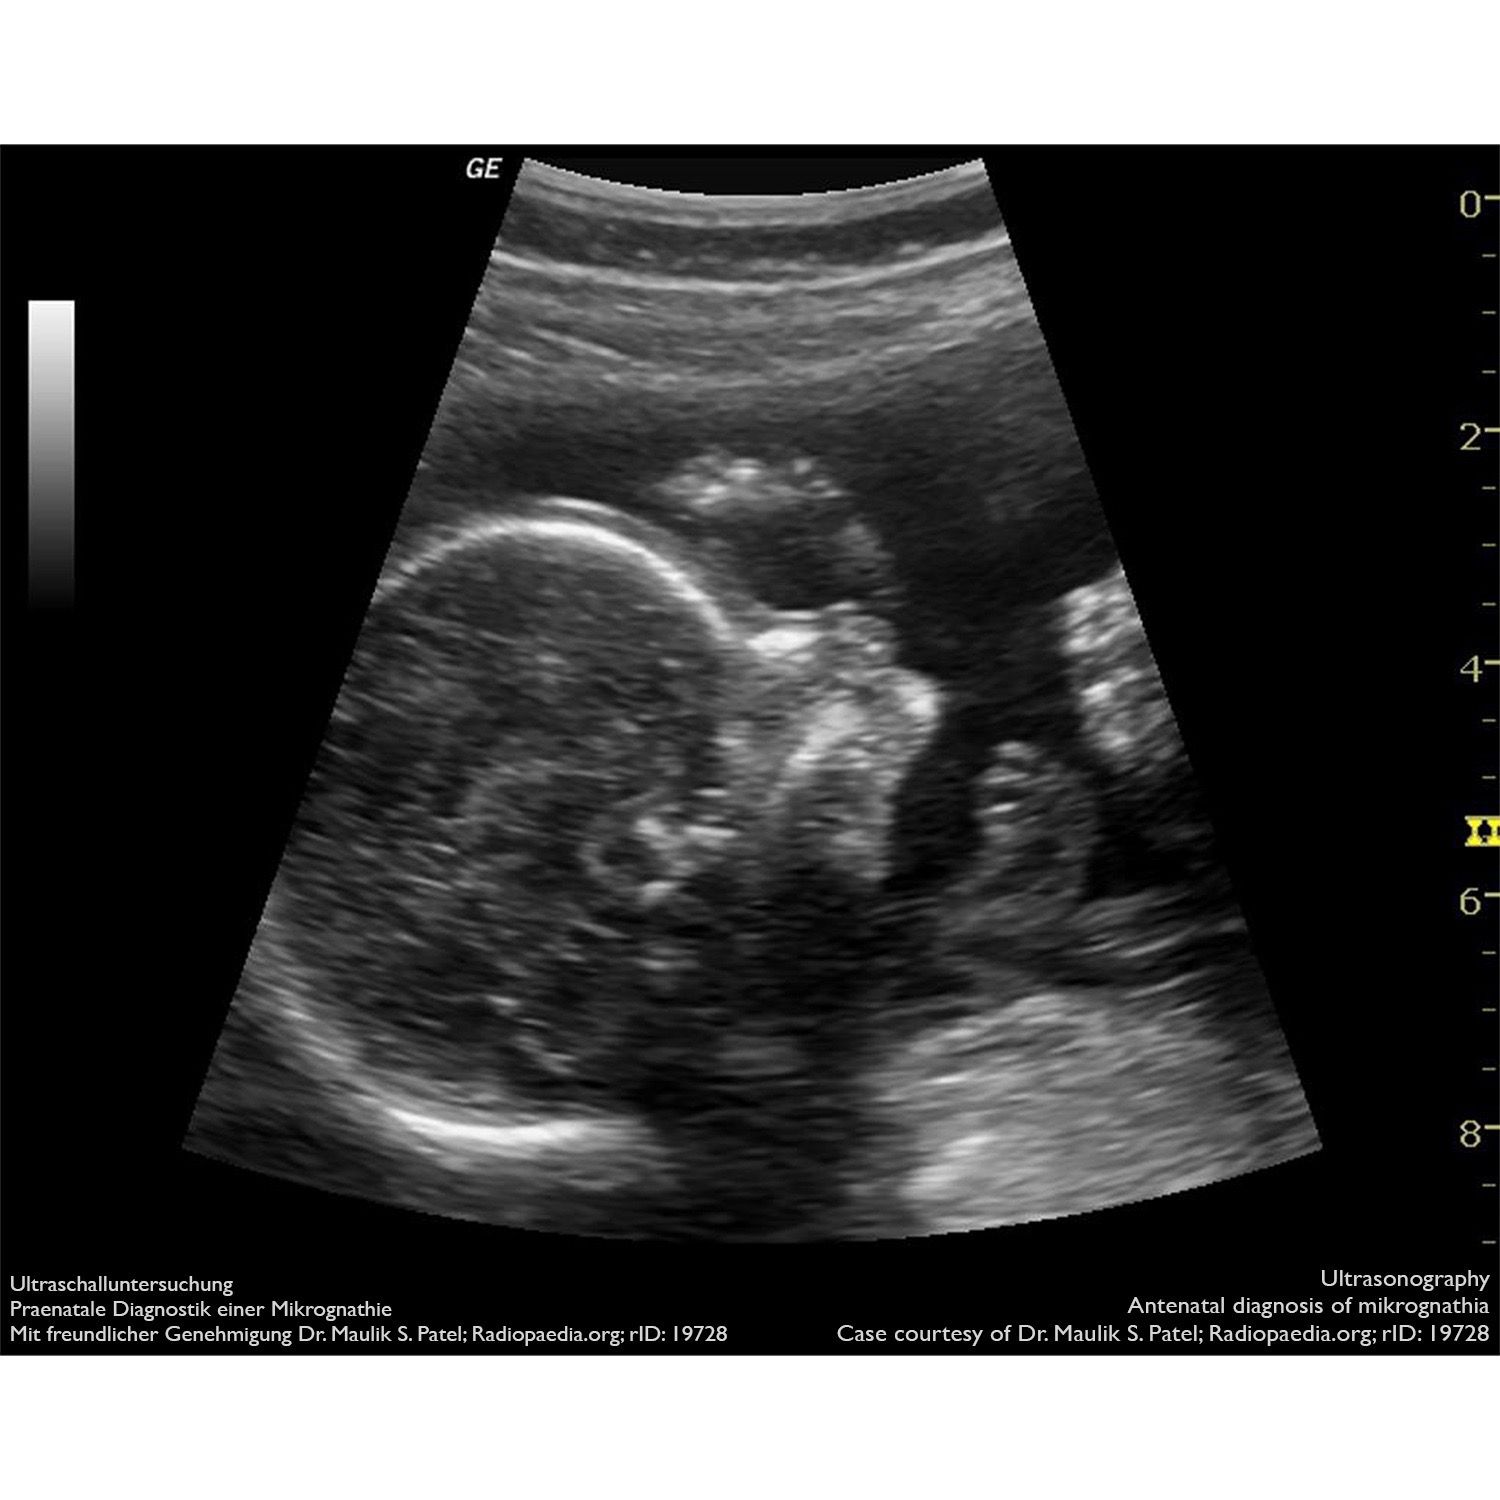 Ultraschall [Ultrasonography] | Bildgebung – Imaging | Pinterest ...